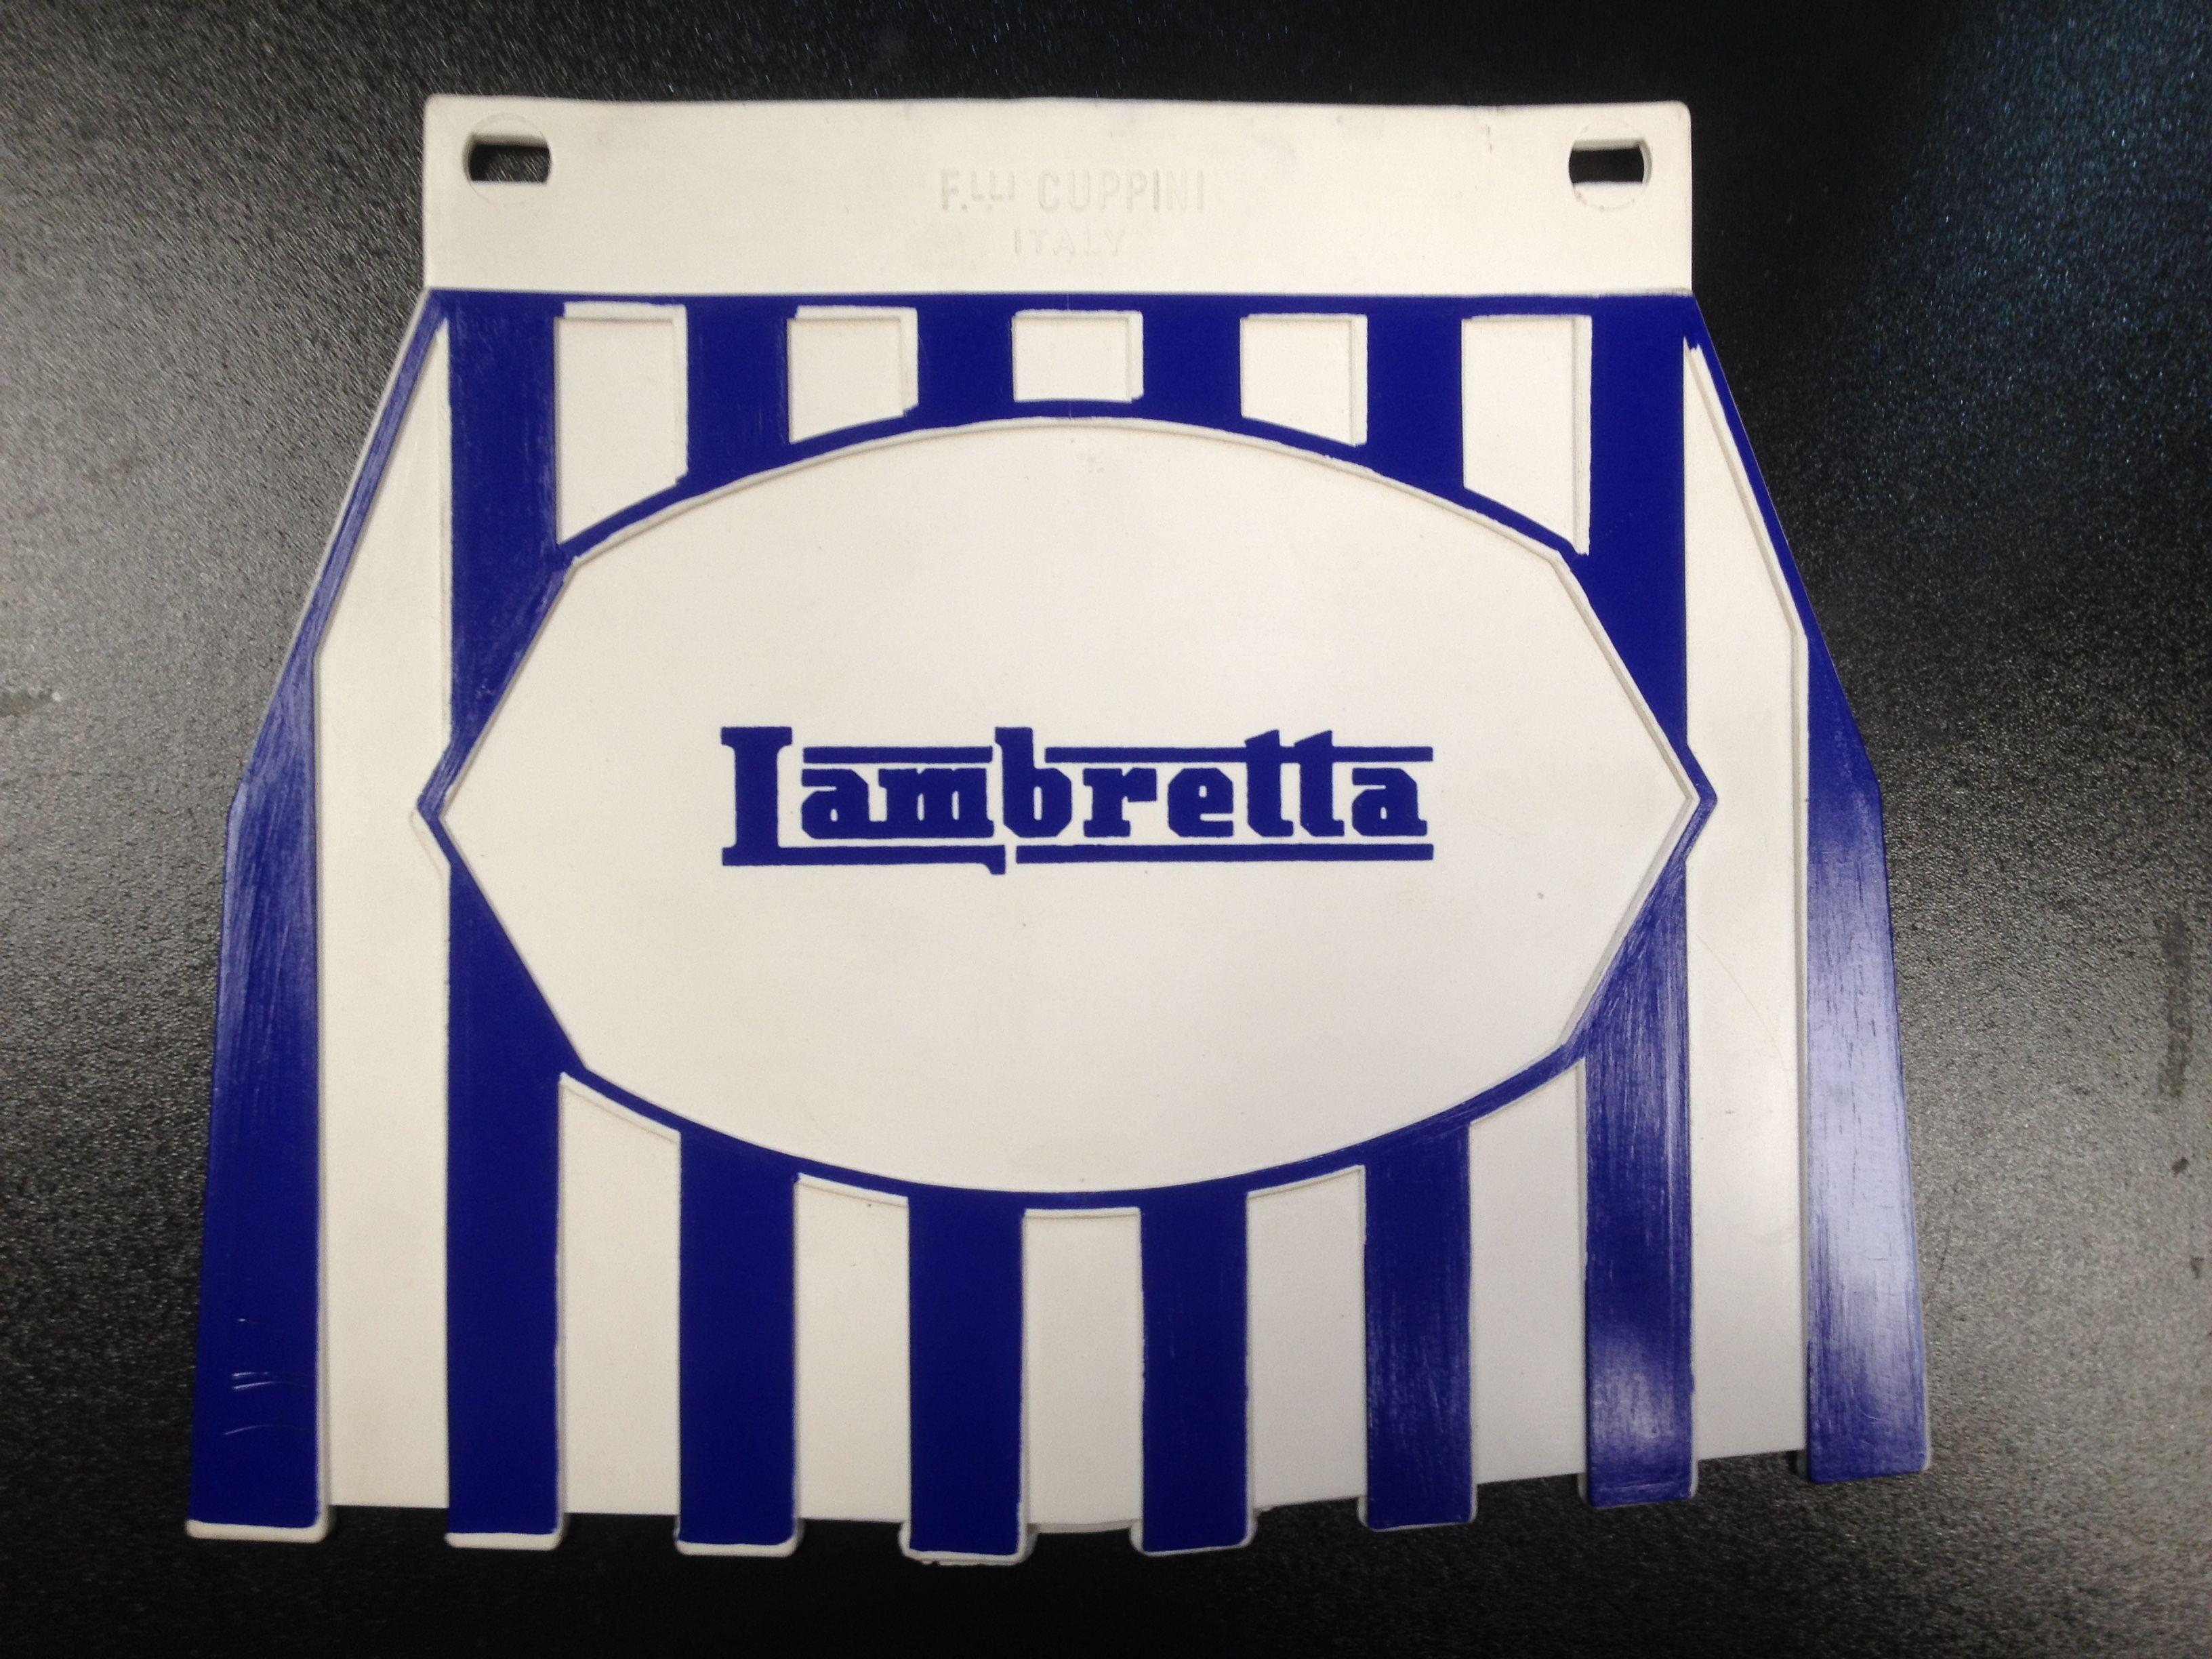 Dark Blue and White Logo - Mud flap striped (Lambretta logo) dark blue on white